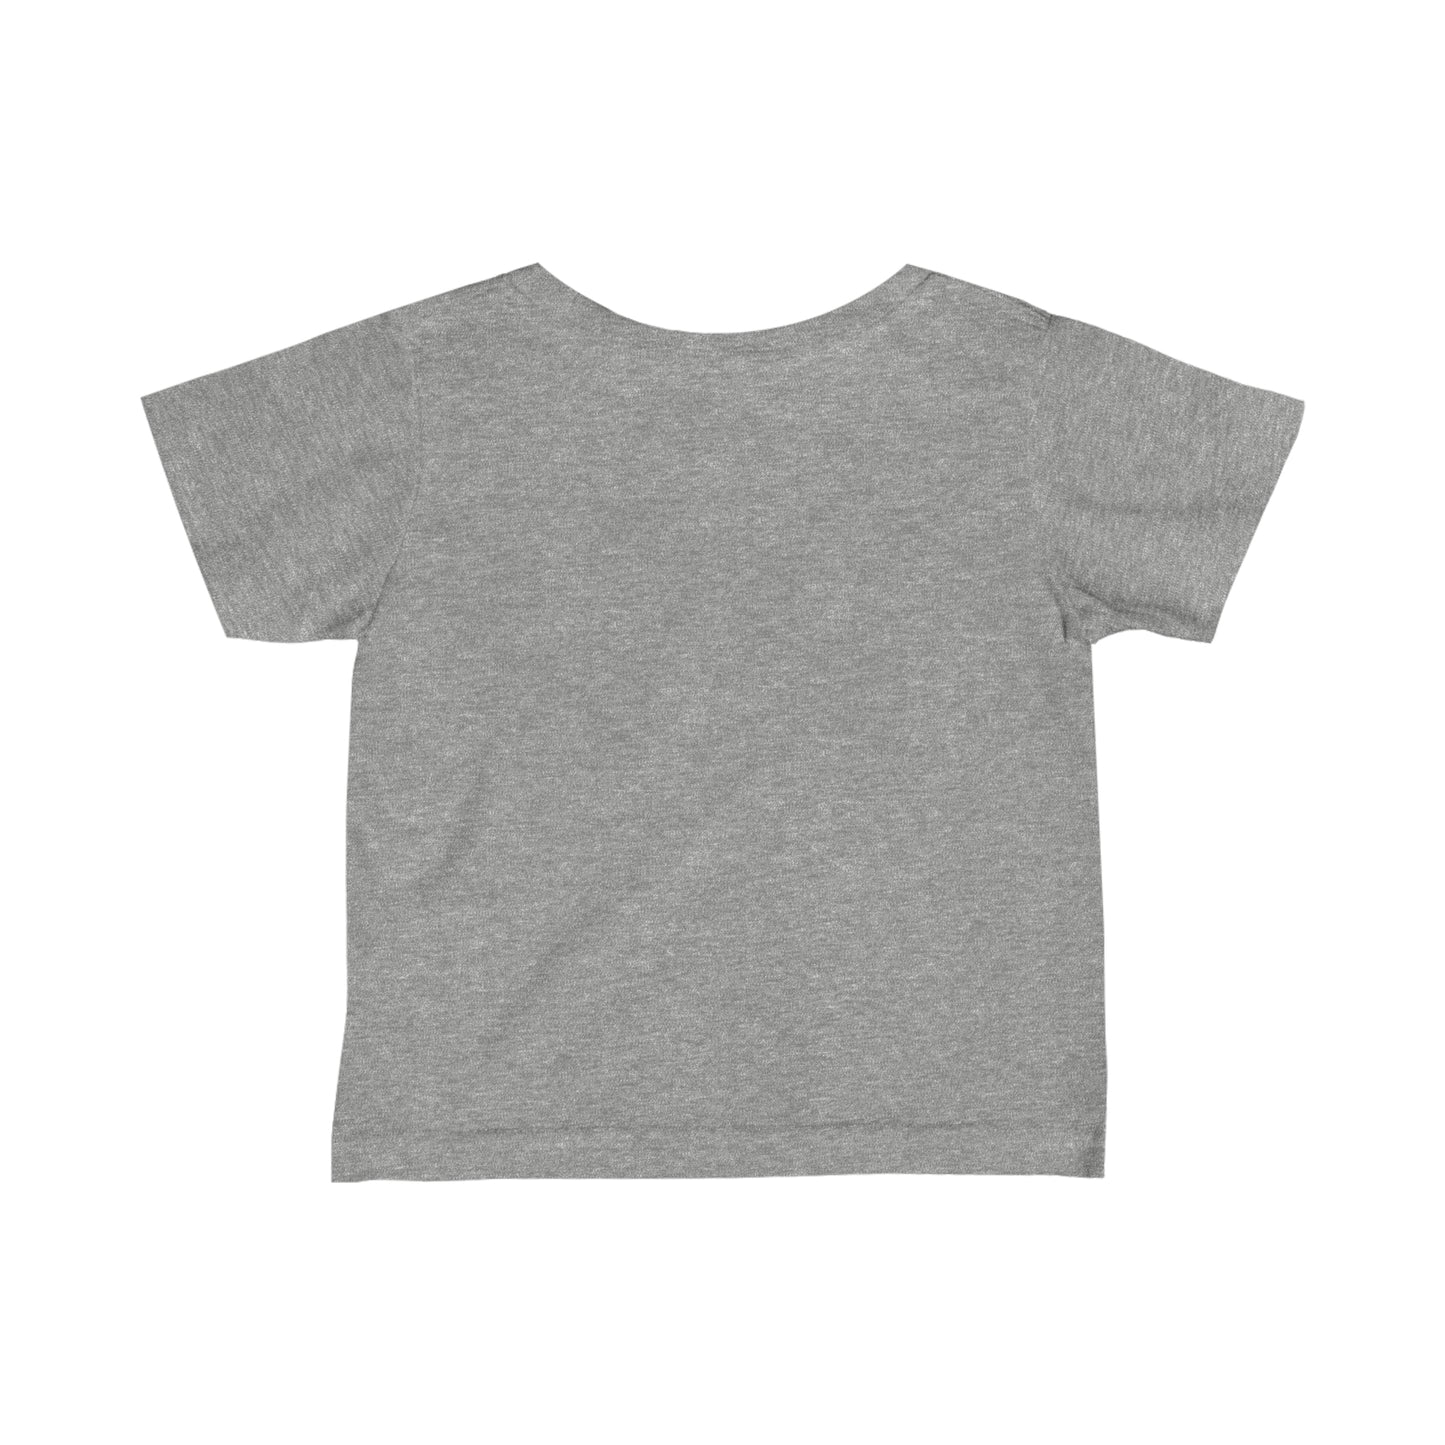 Cave Computer Infant T-Shirt